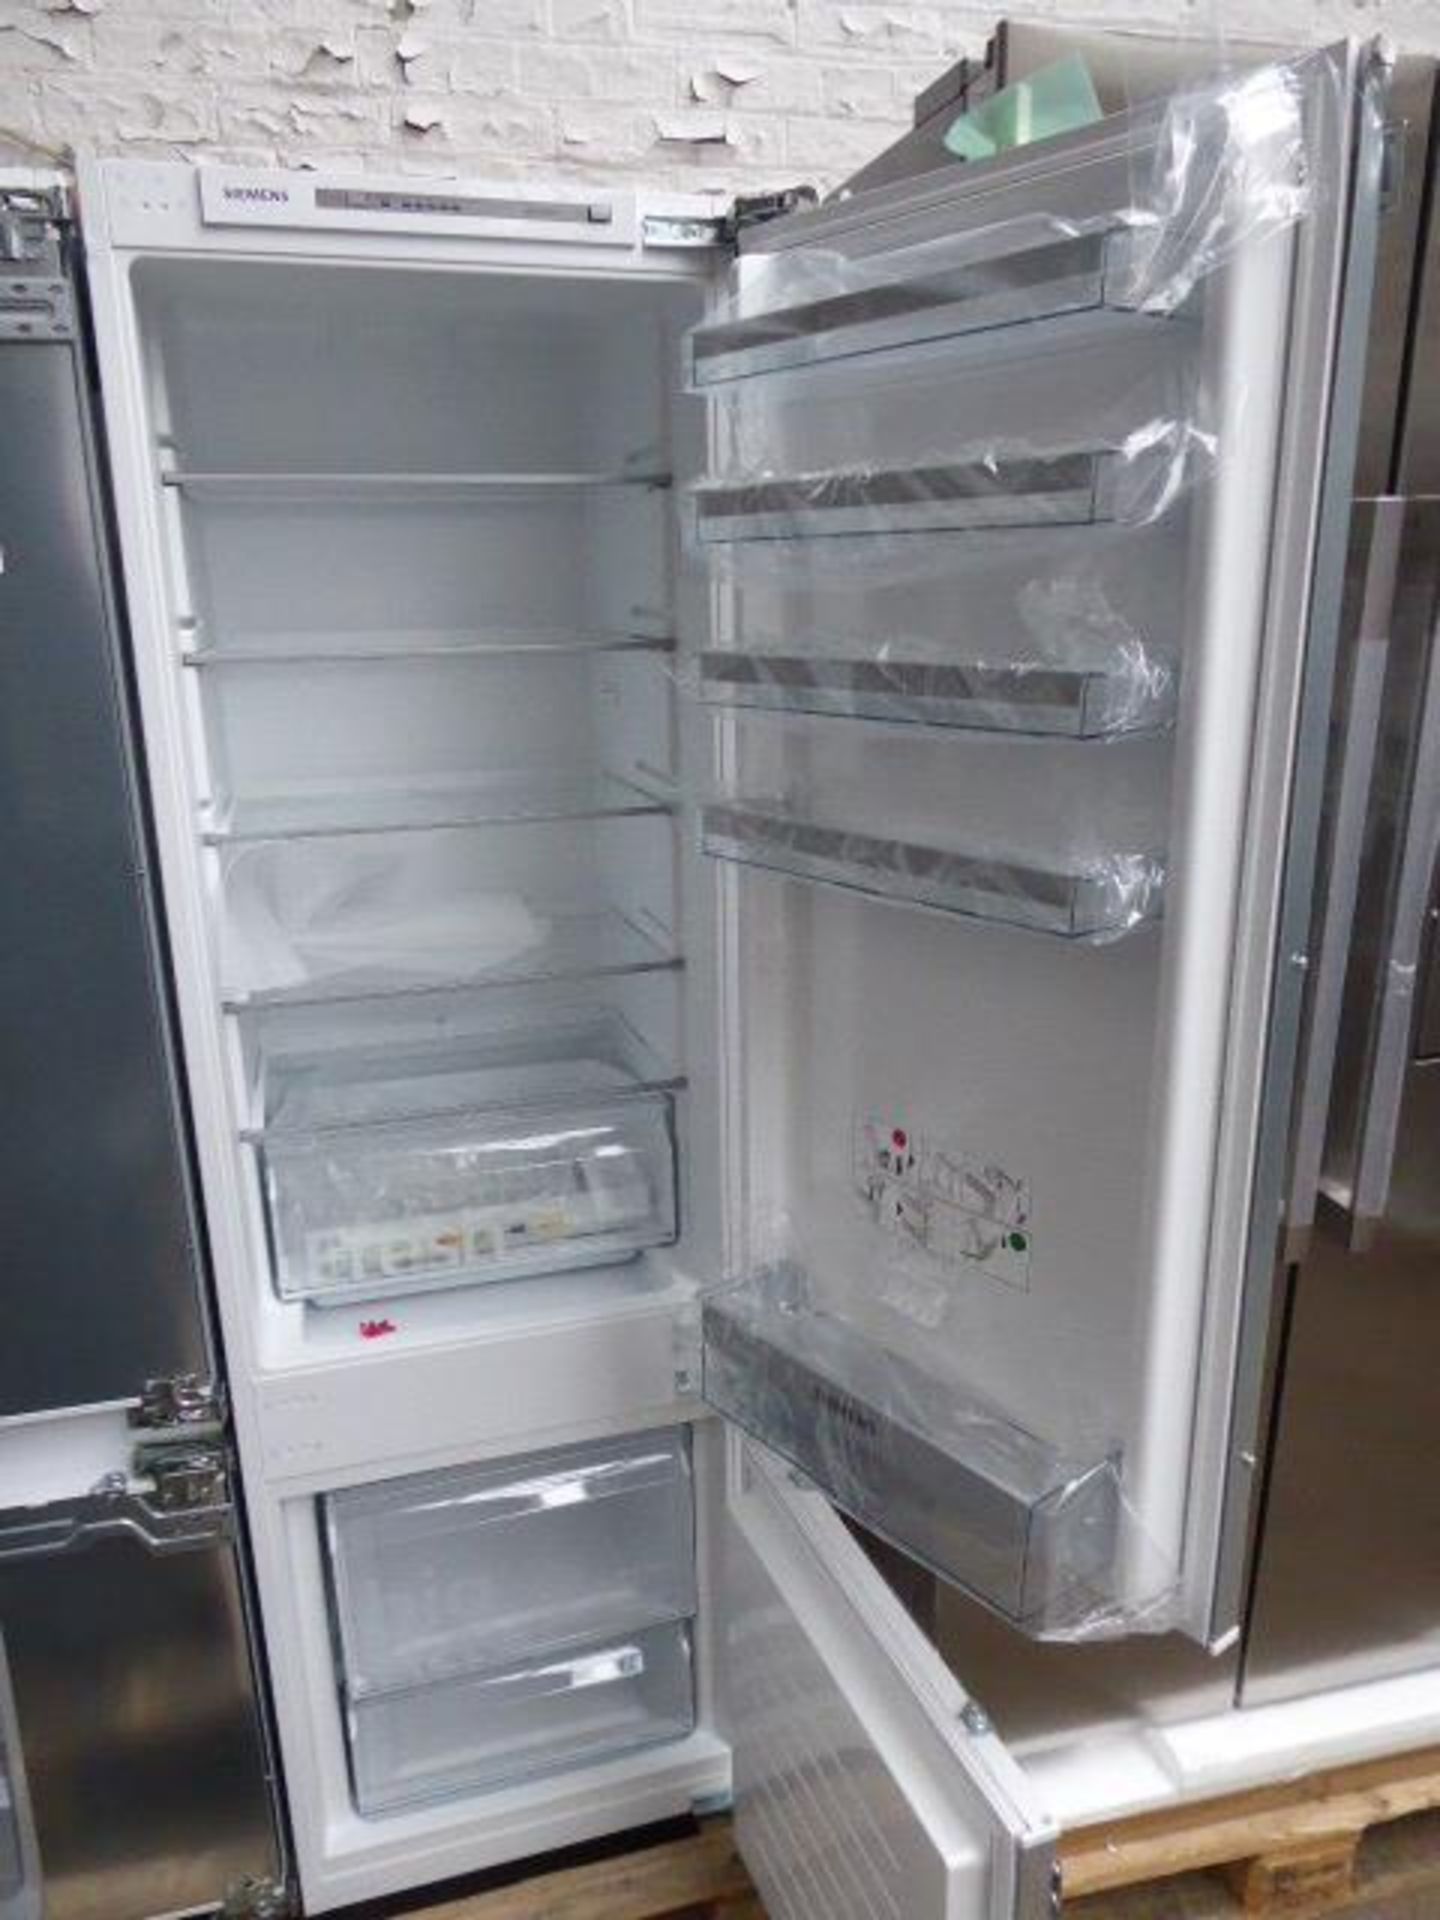 KI87VVFF0GB Siemens Built-in fridge-freezer combination - Image 2 of 2